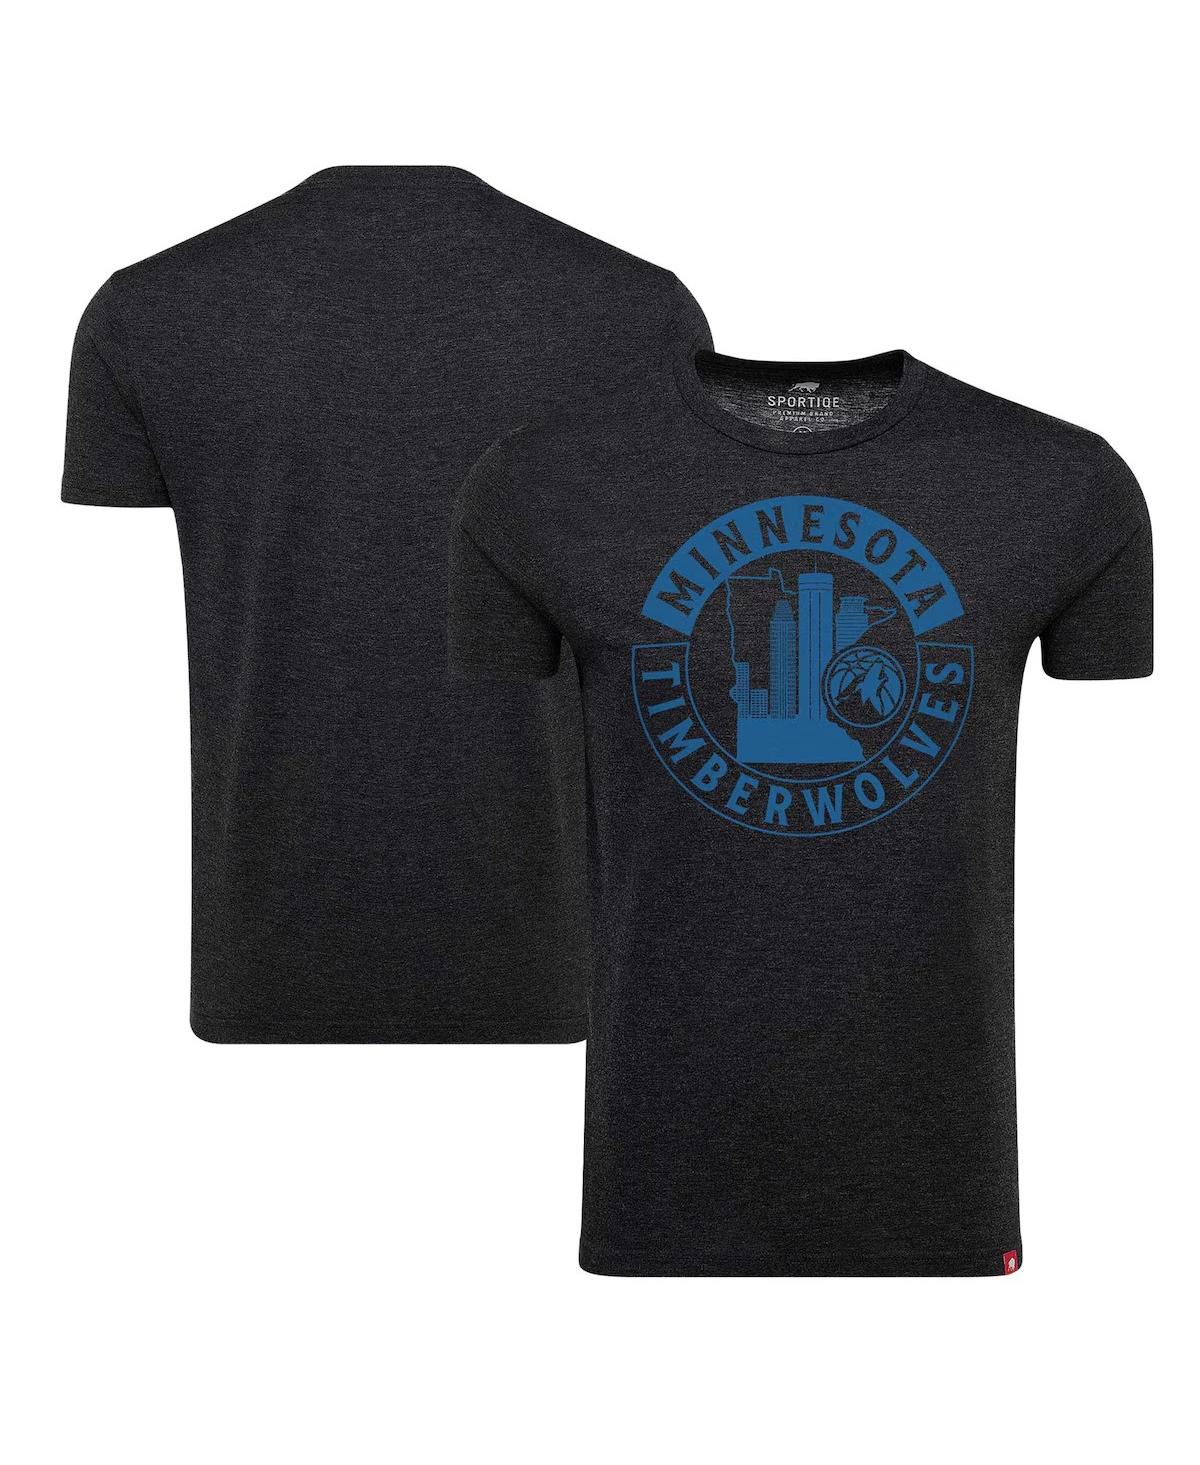 Men's and Women's Heather Black Minnesota Timberwolves Comfy Super Soft Tri-Blend T-Shirt - Black